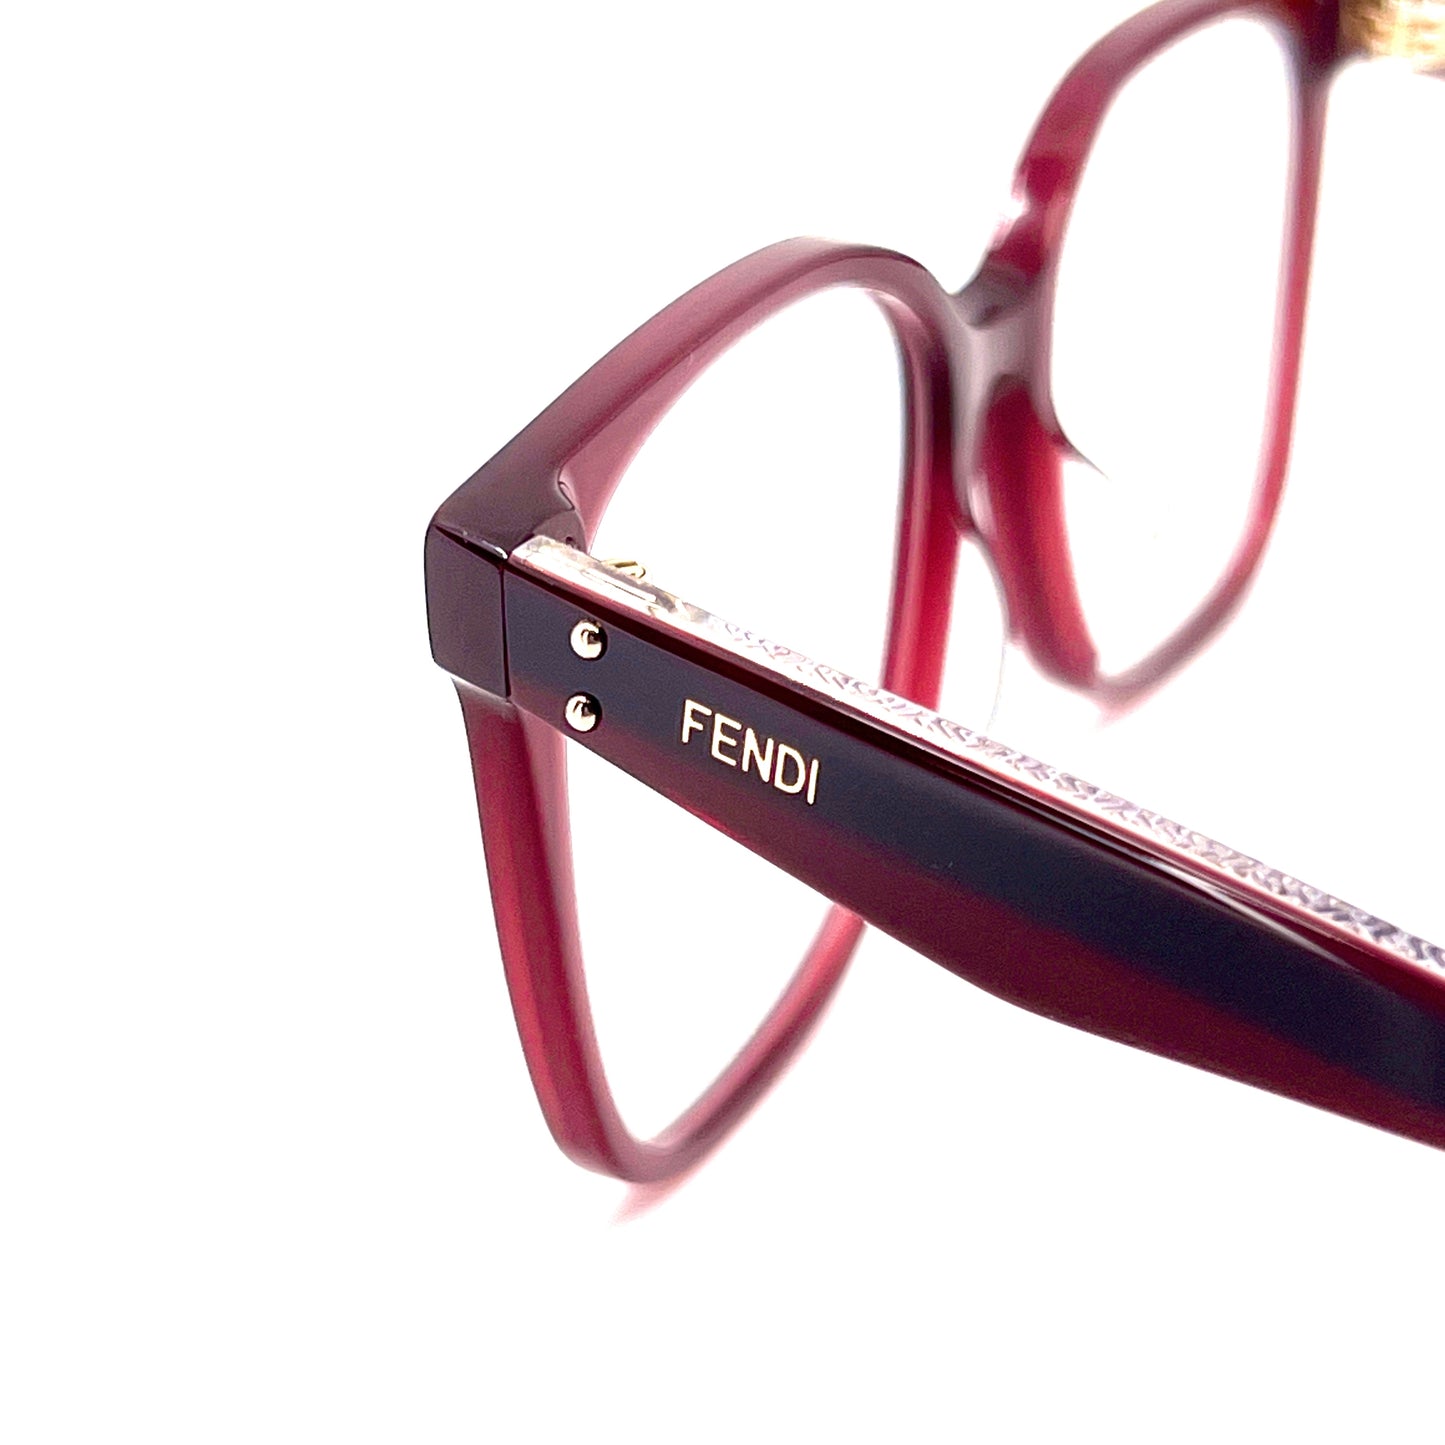 FENDI Eyeglasses FE50004I 069